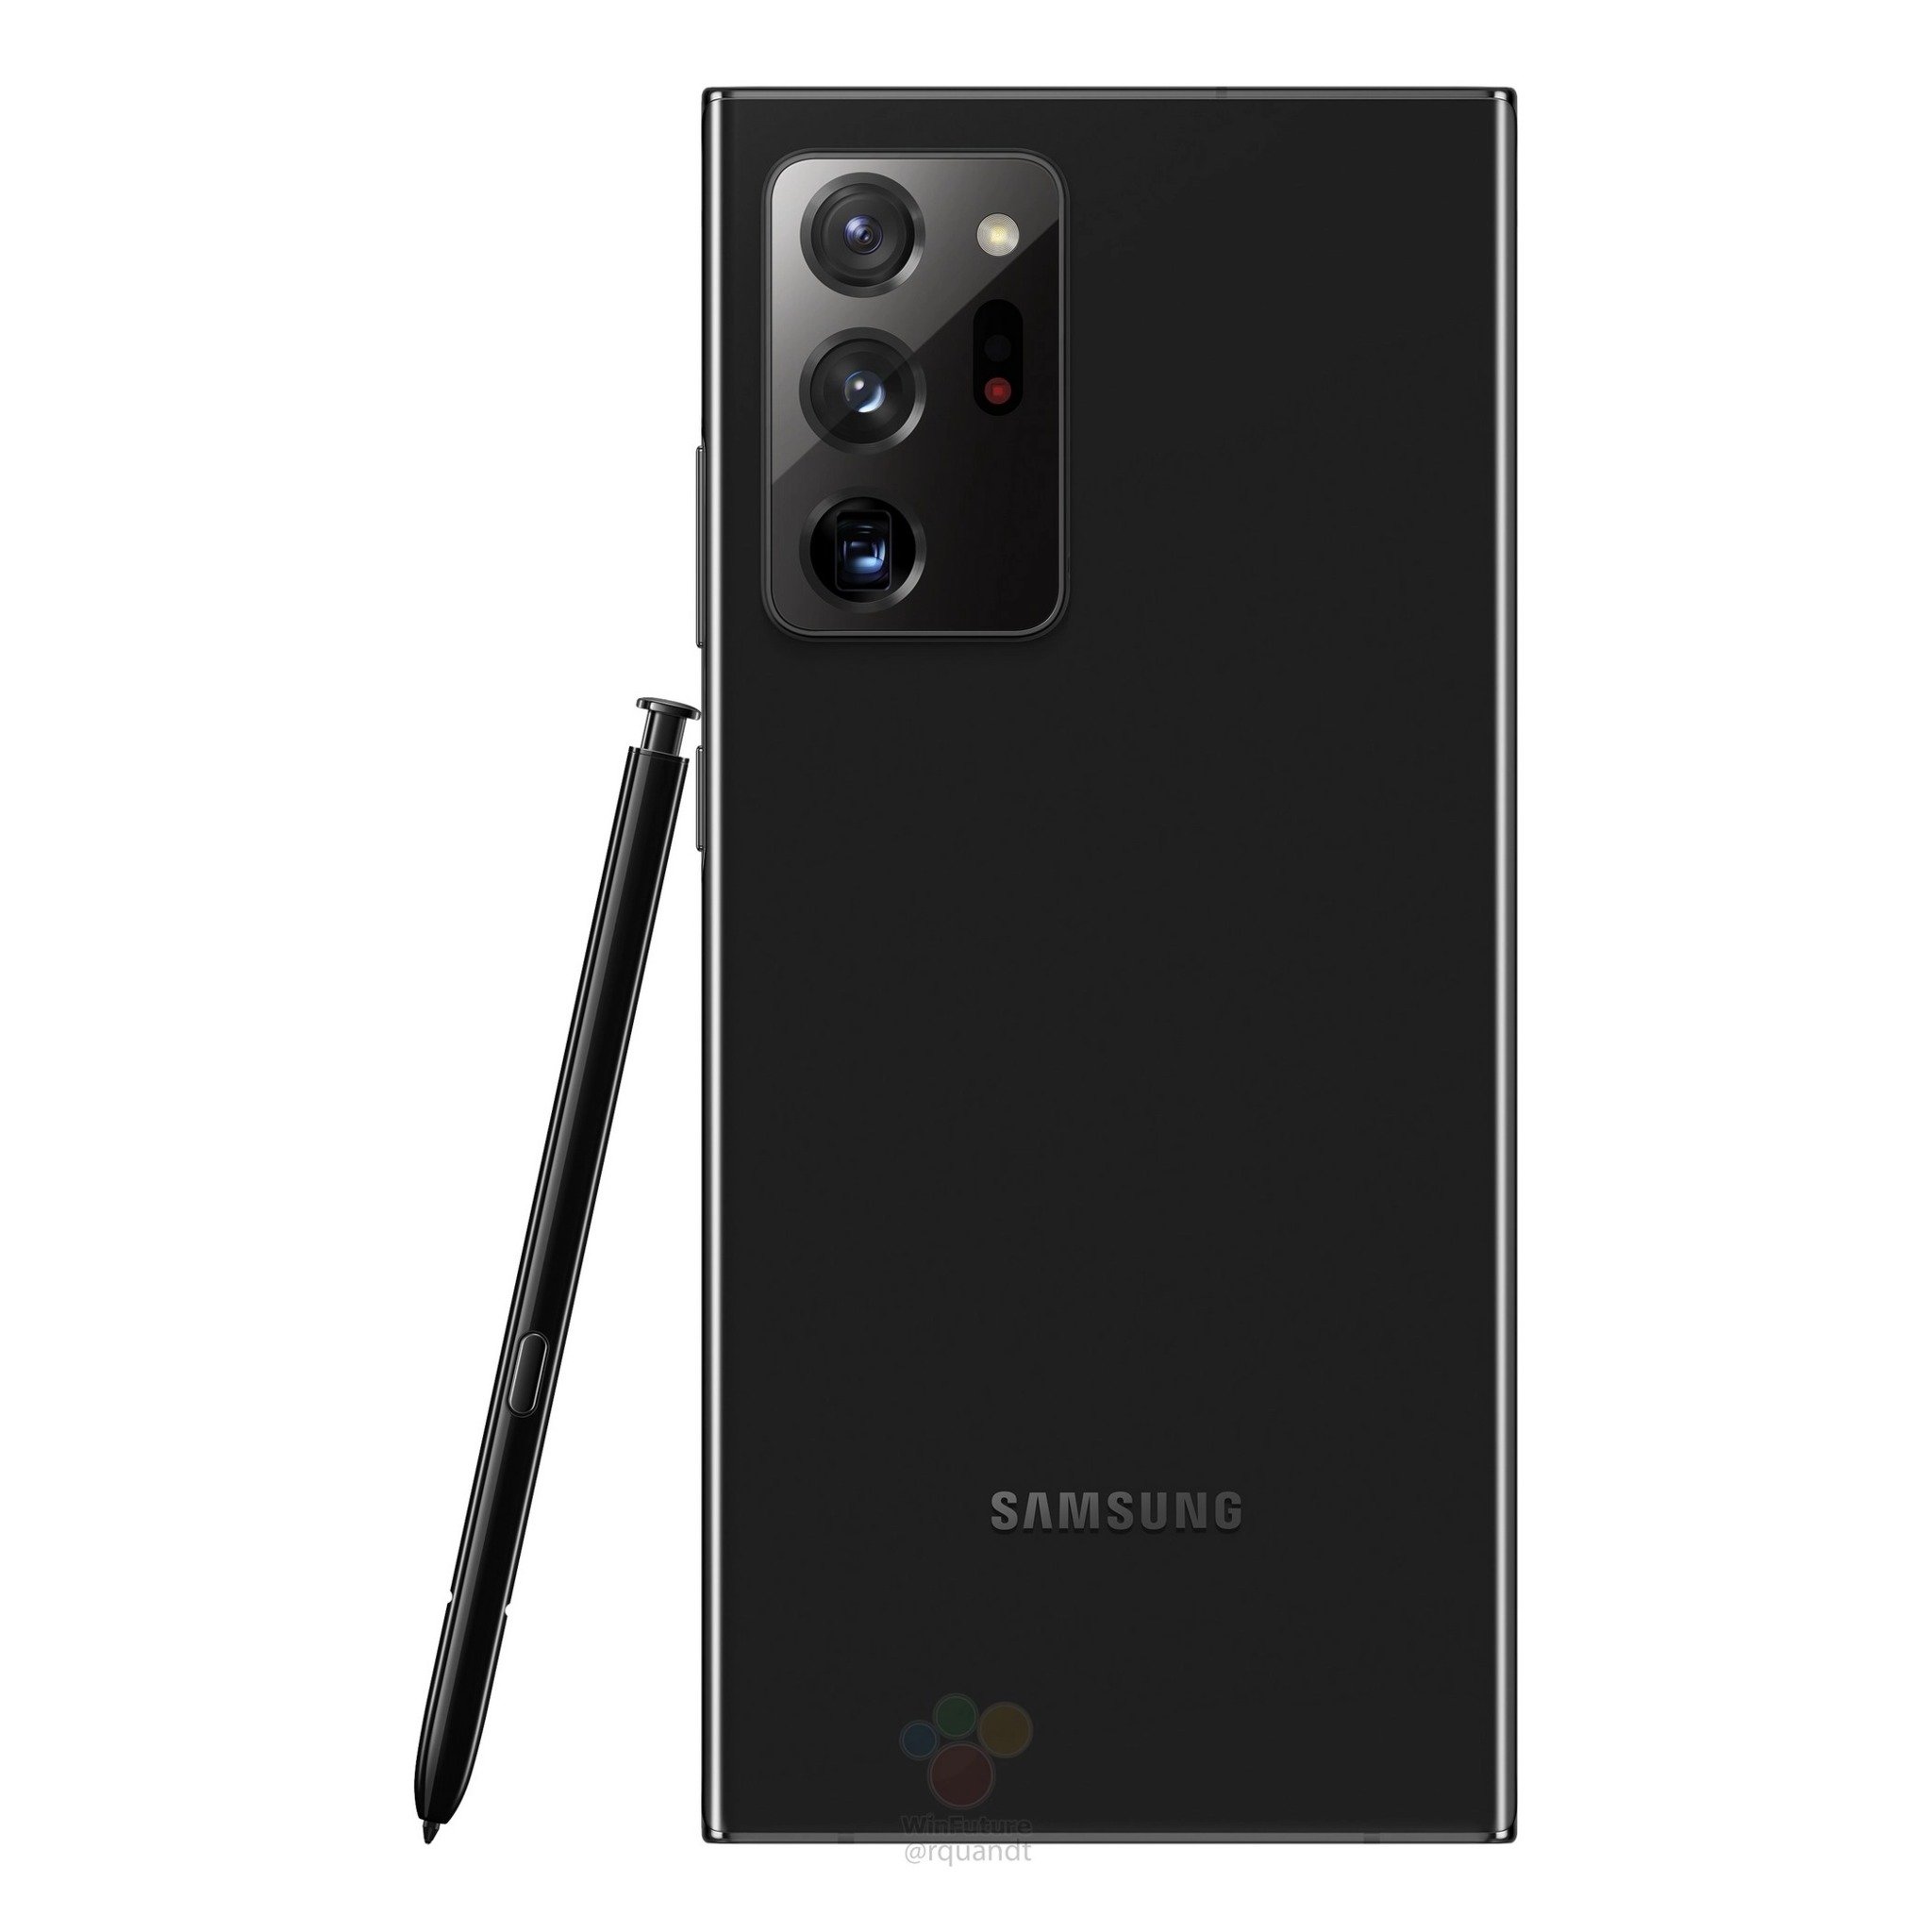 Samsung Galaxy Note 20 Ultra Leaked Press Render